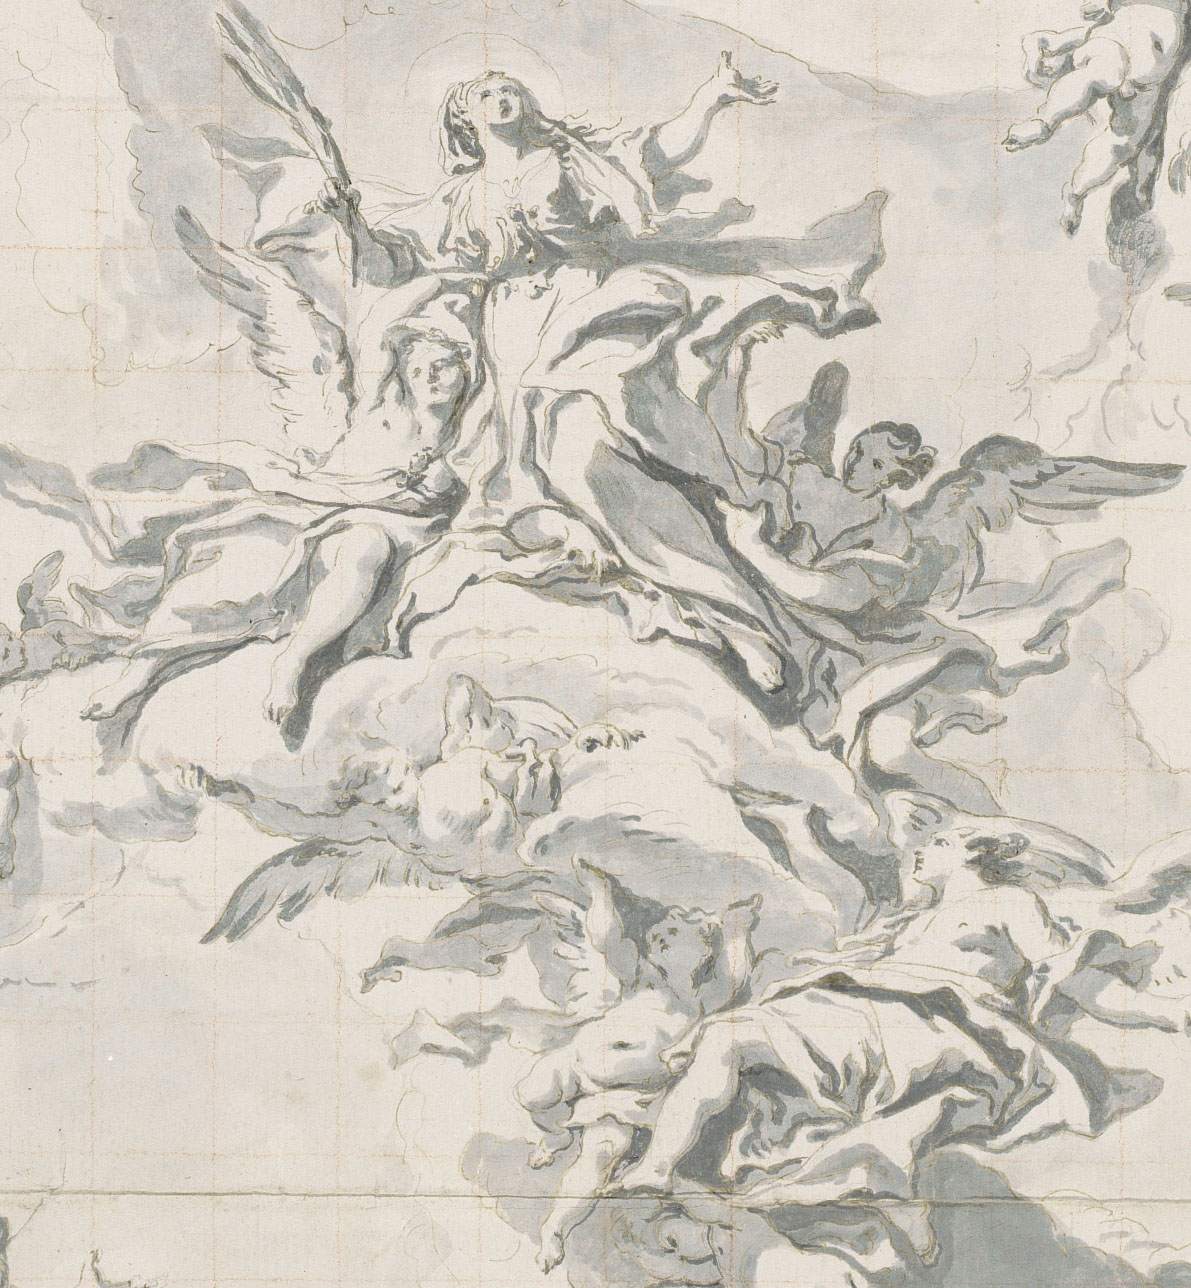 1759-1760_Carlo Innocenzo Carlone_The Apotheosis of Saint Euphemia_DETAIL 5657-021